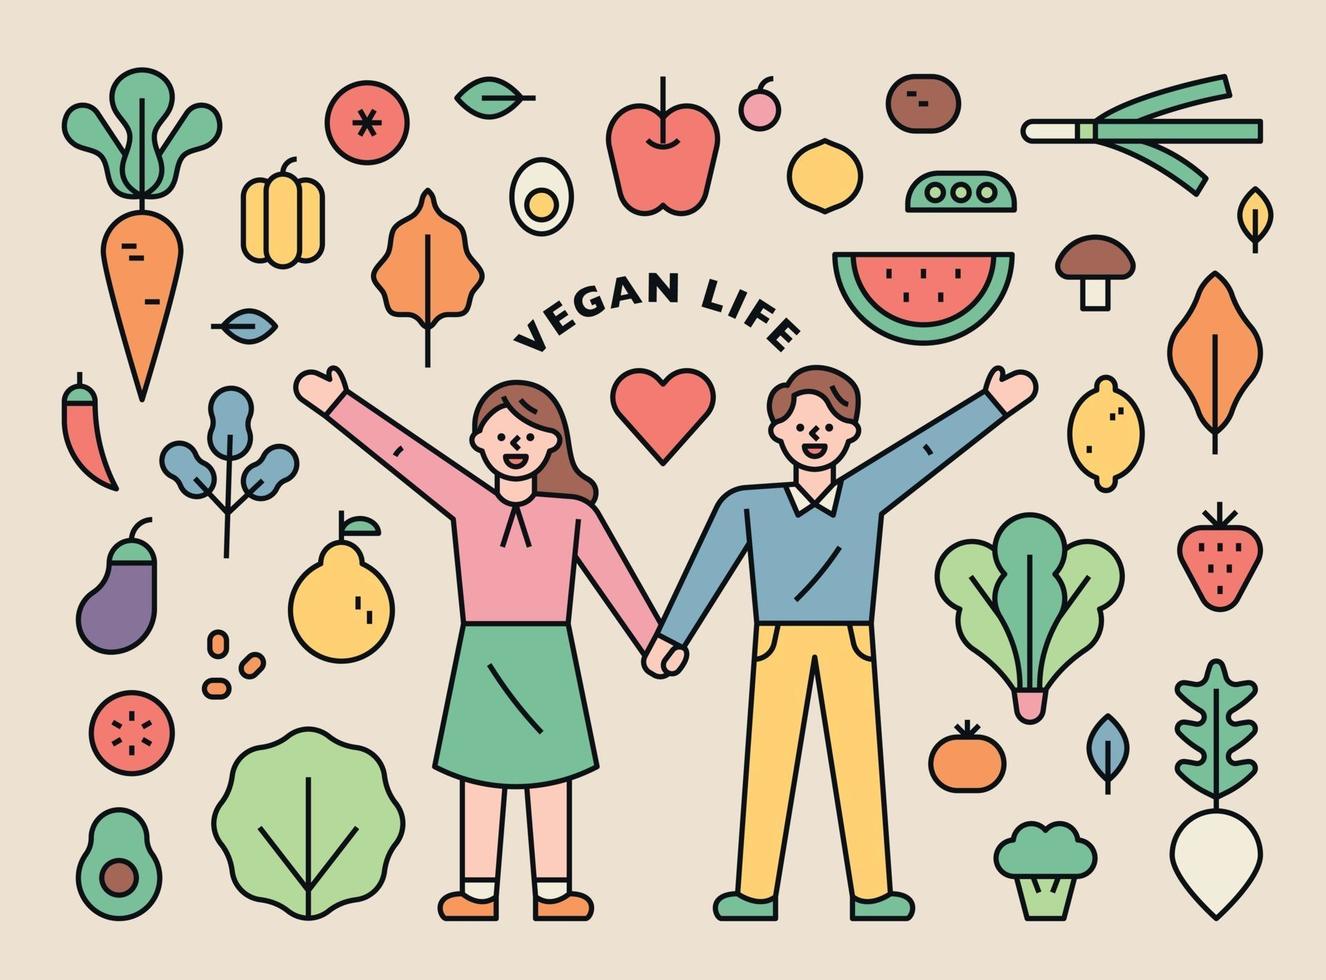 Vegan life icon set. vector